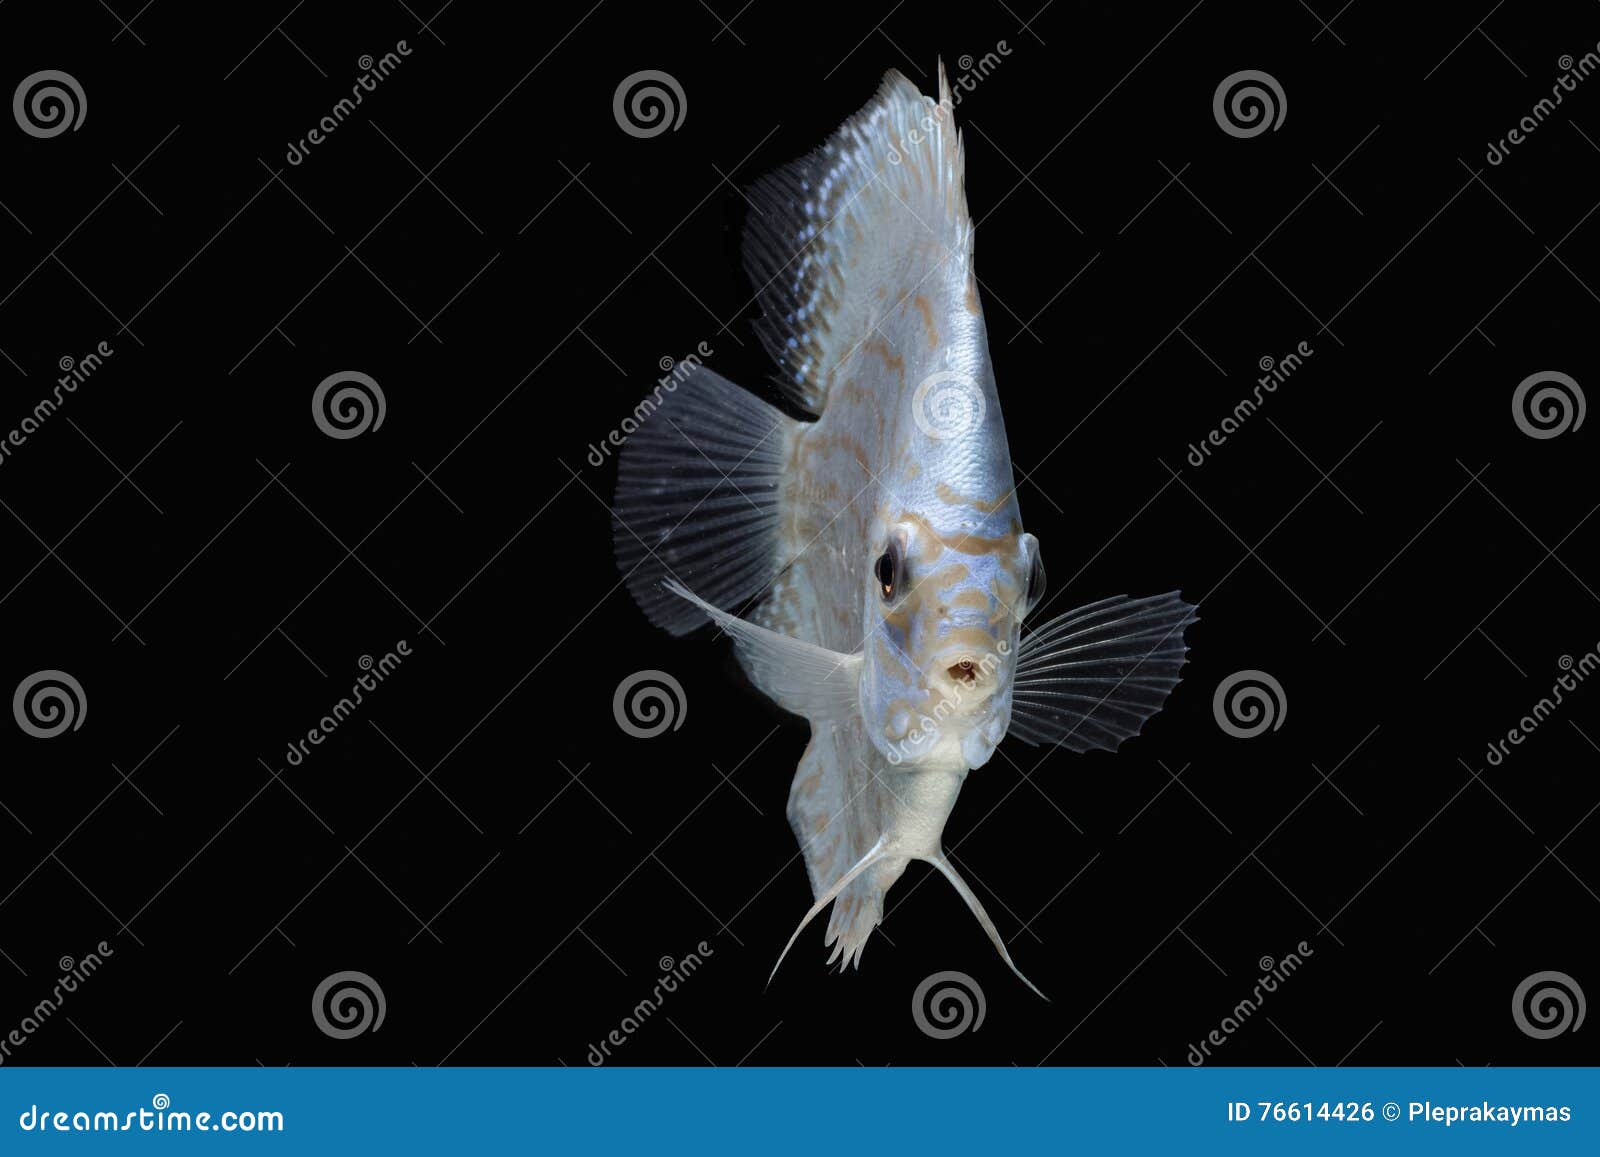 pompadour (discus) fish with copy space